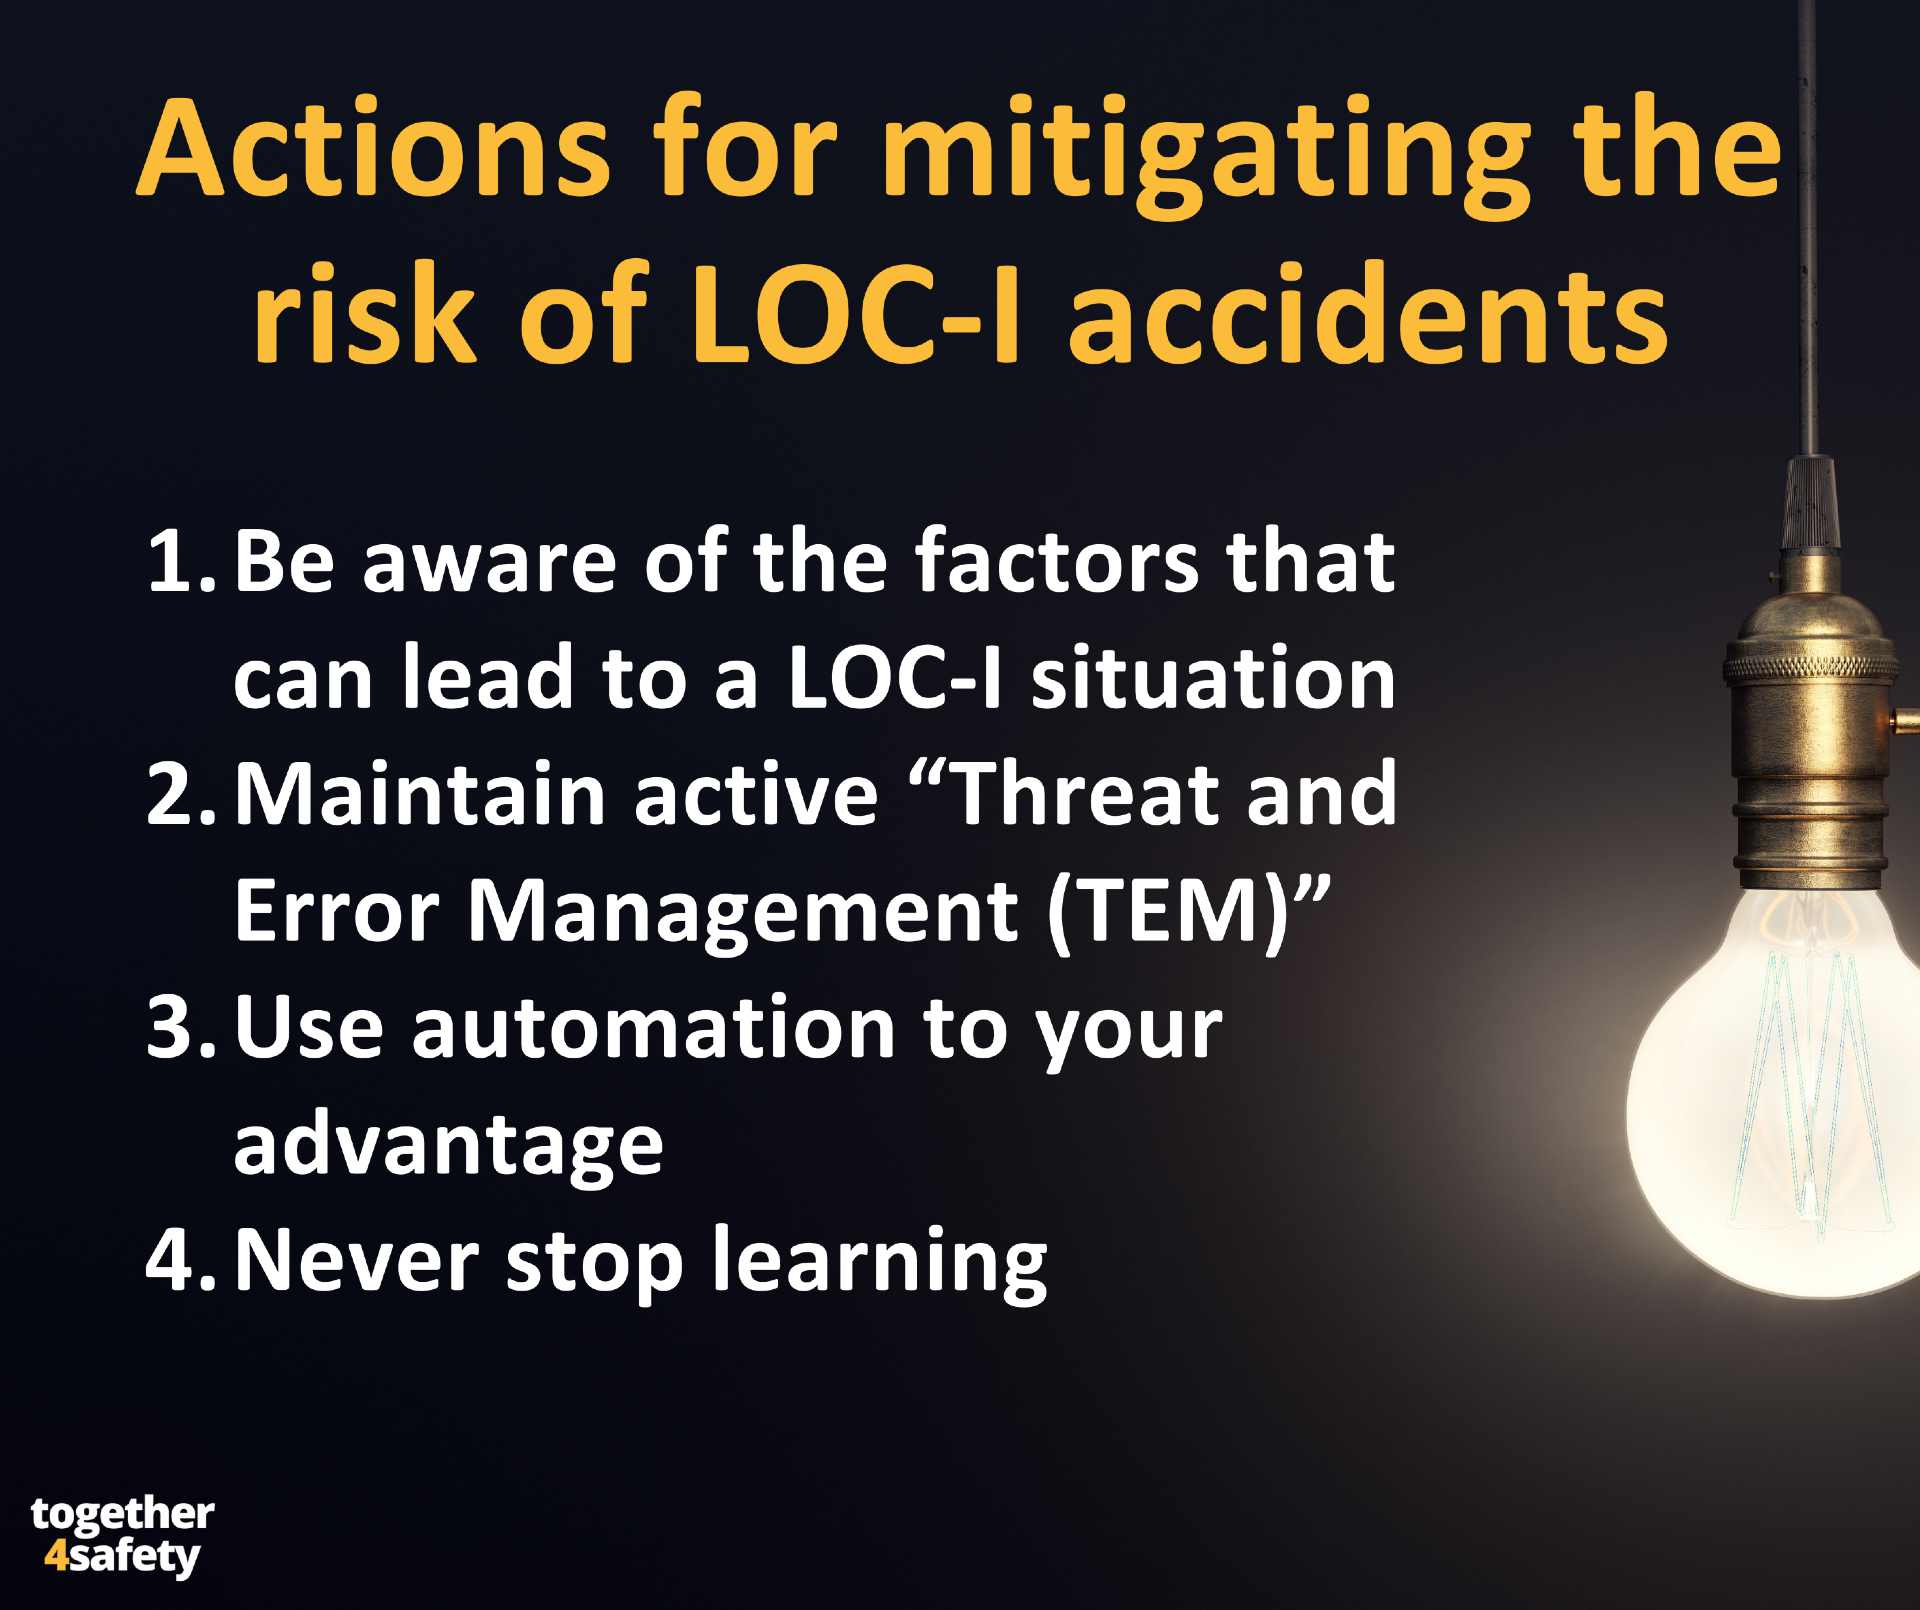 LOC-I actions